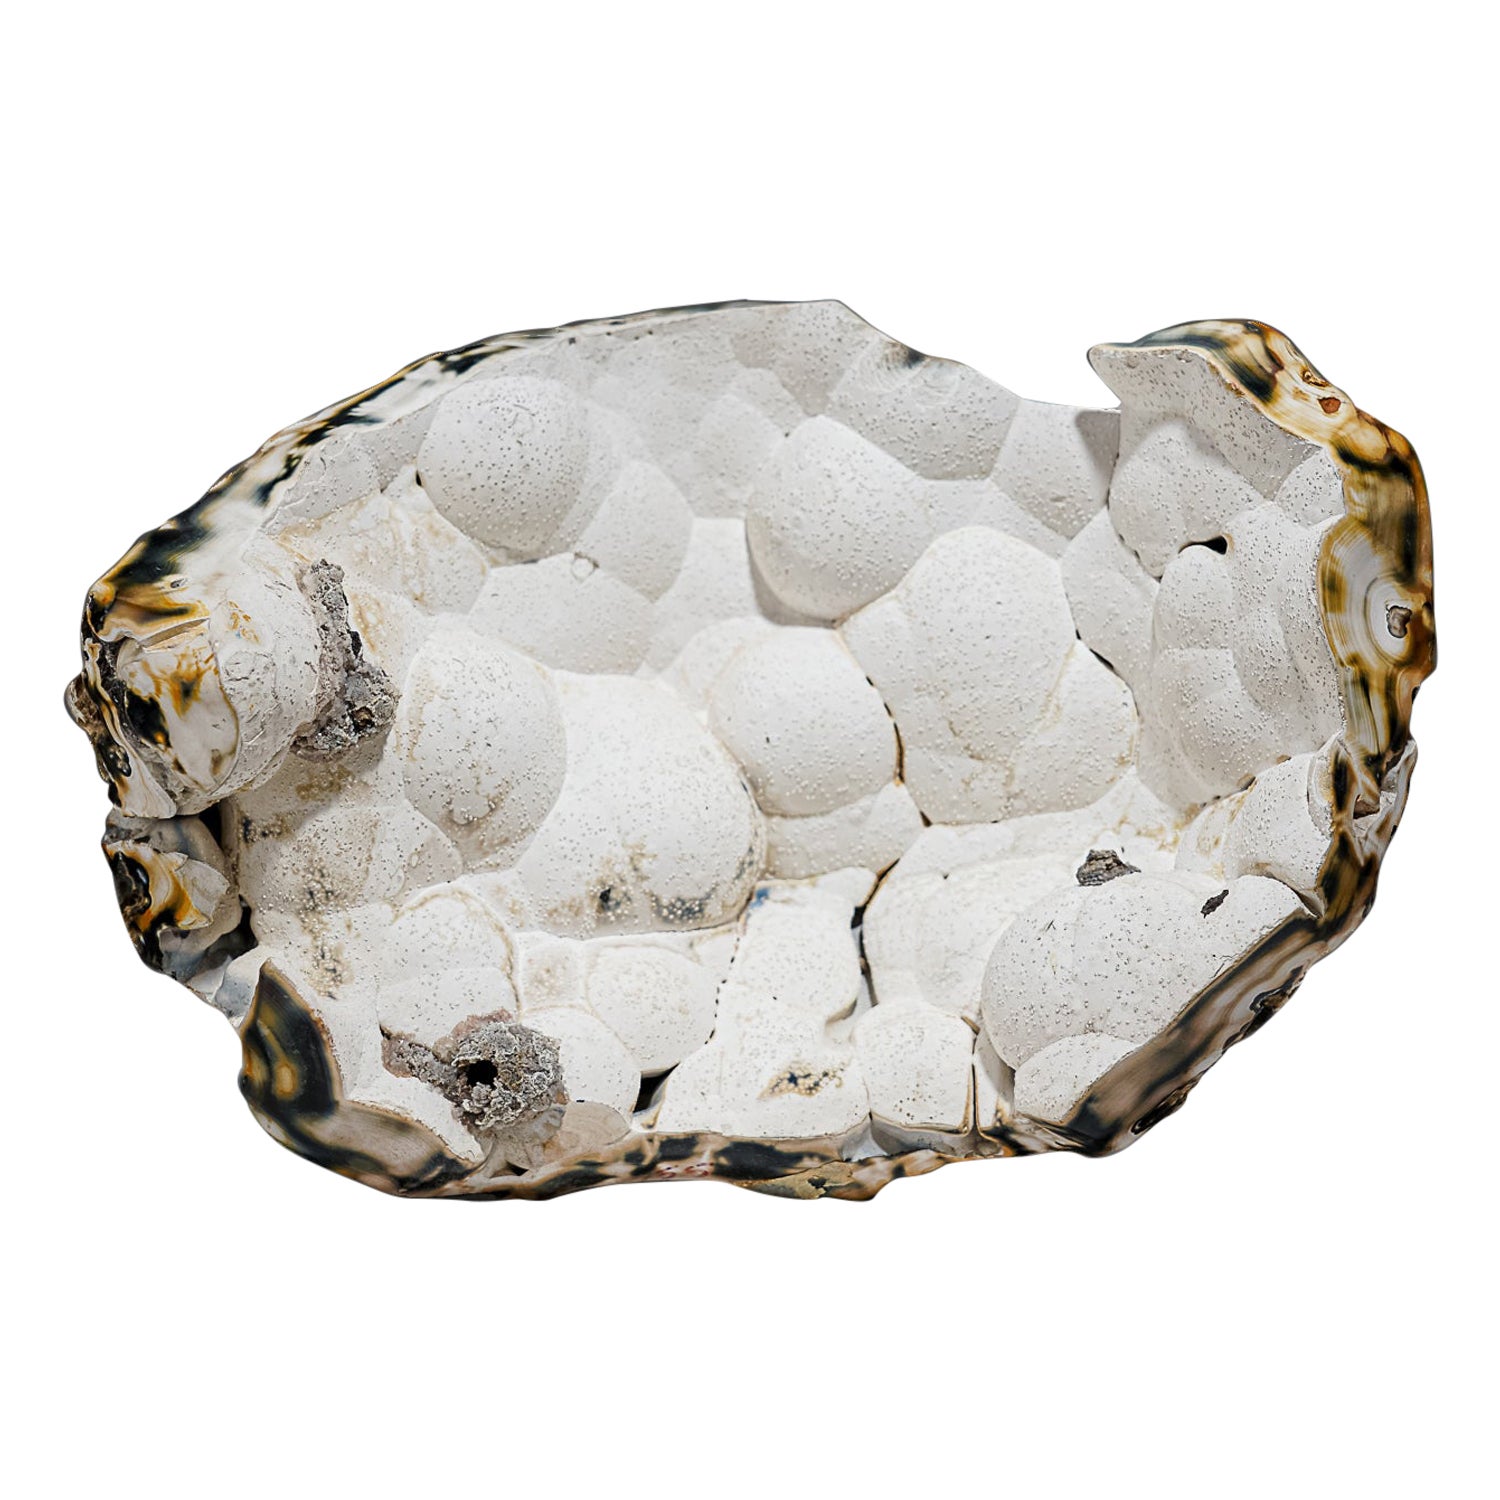 Genuine Indonasian Agate Geode (11 lbs)